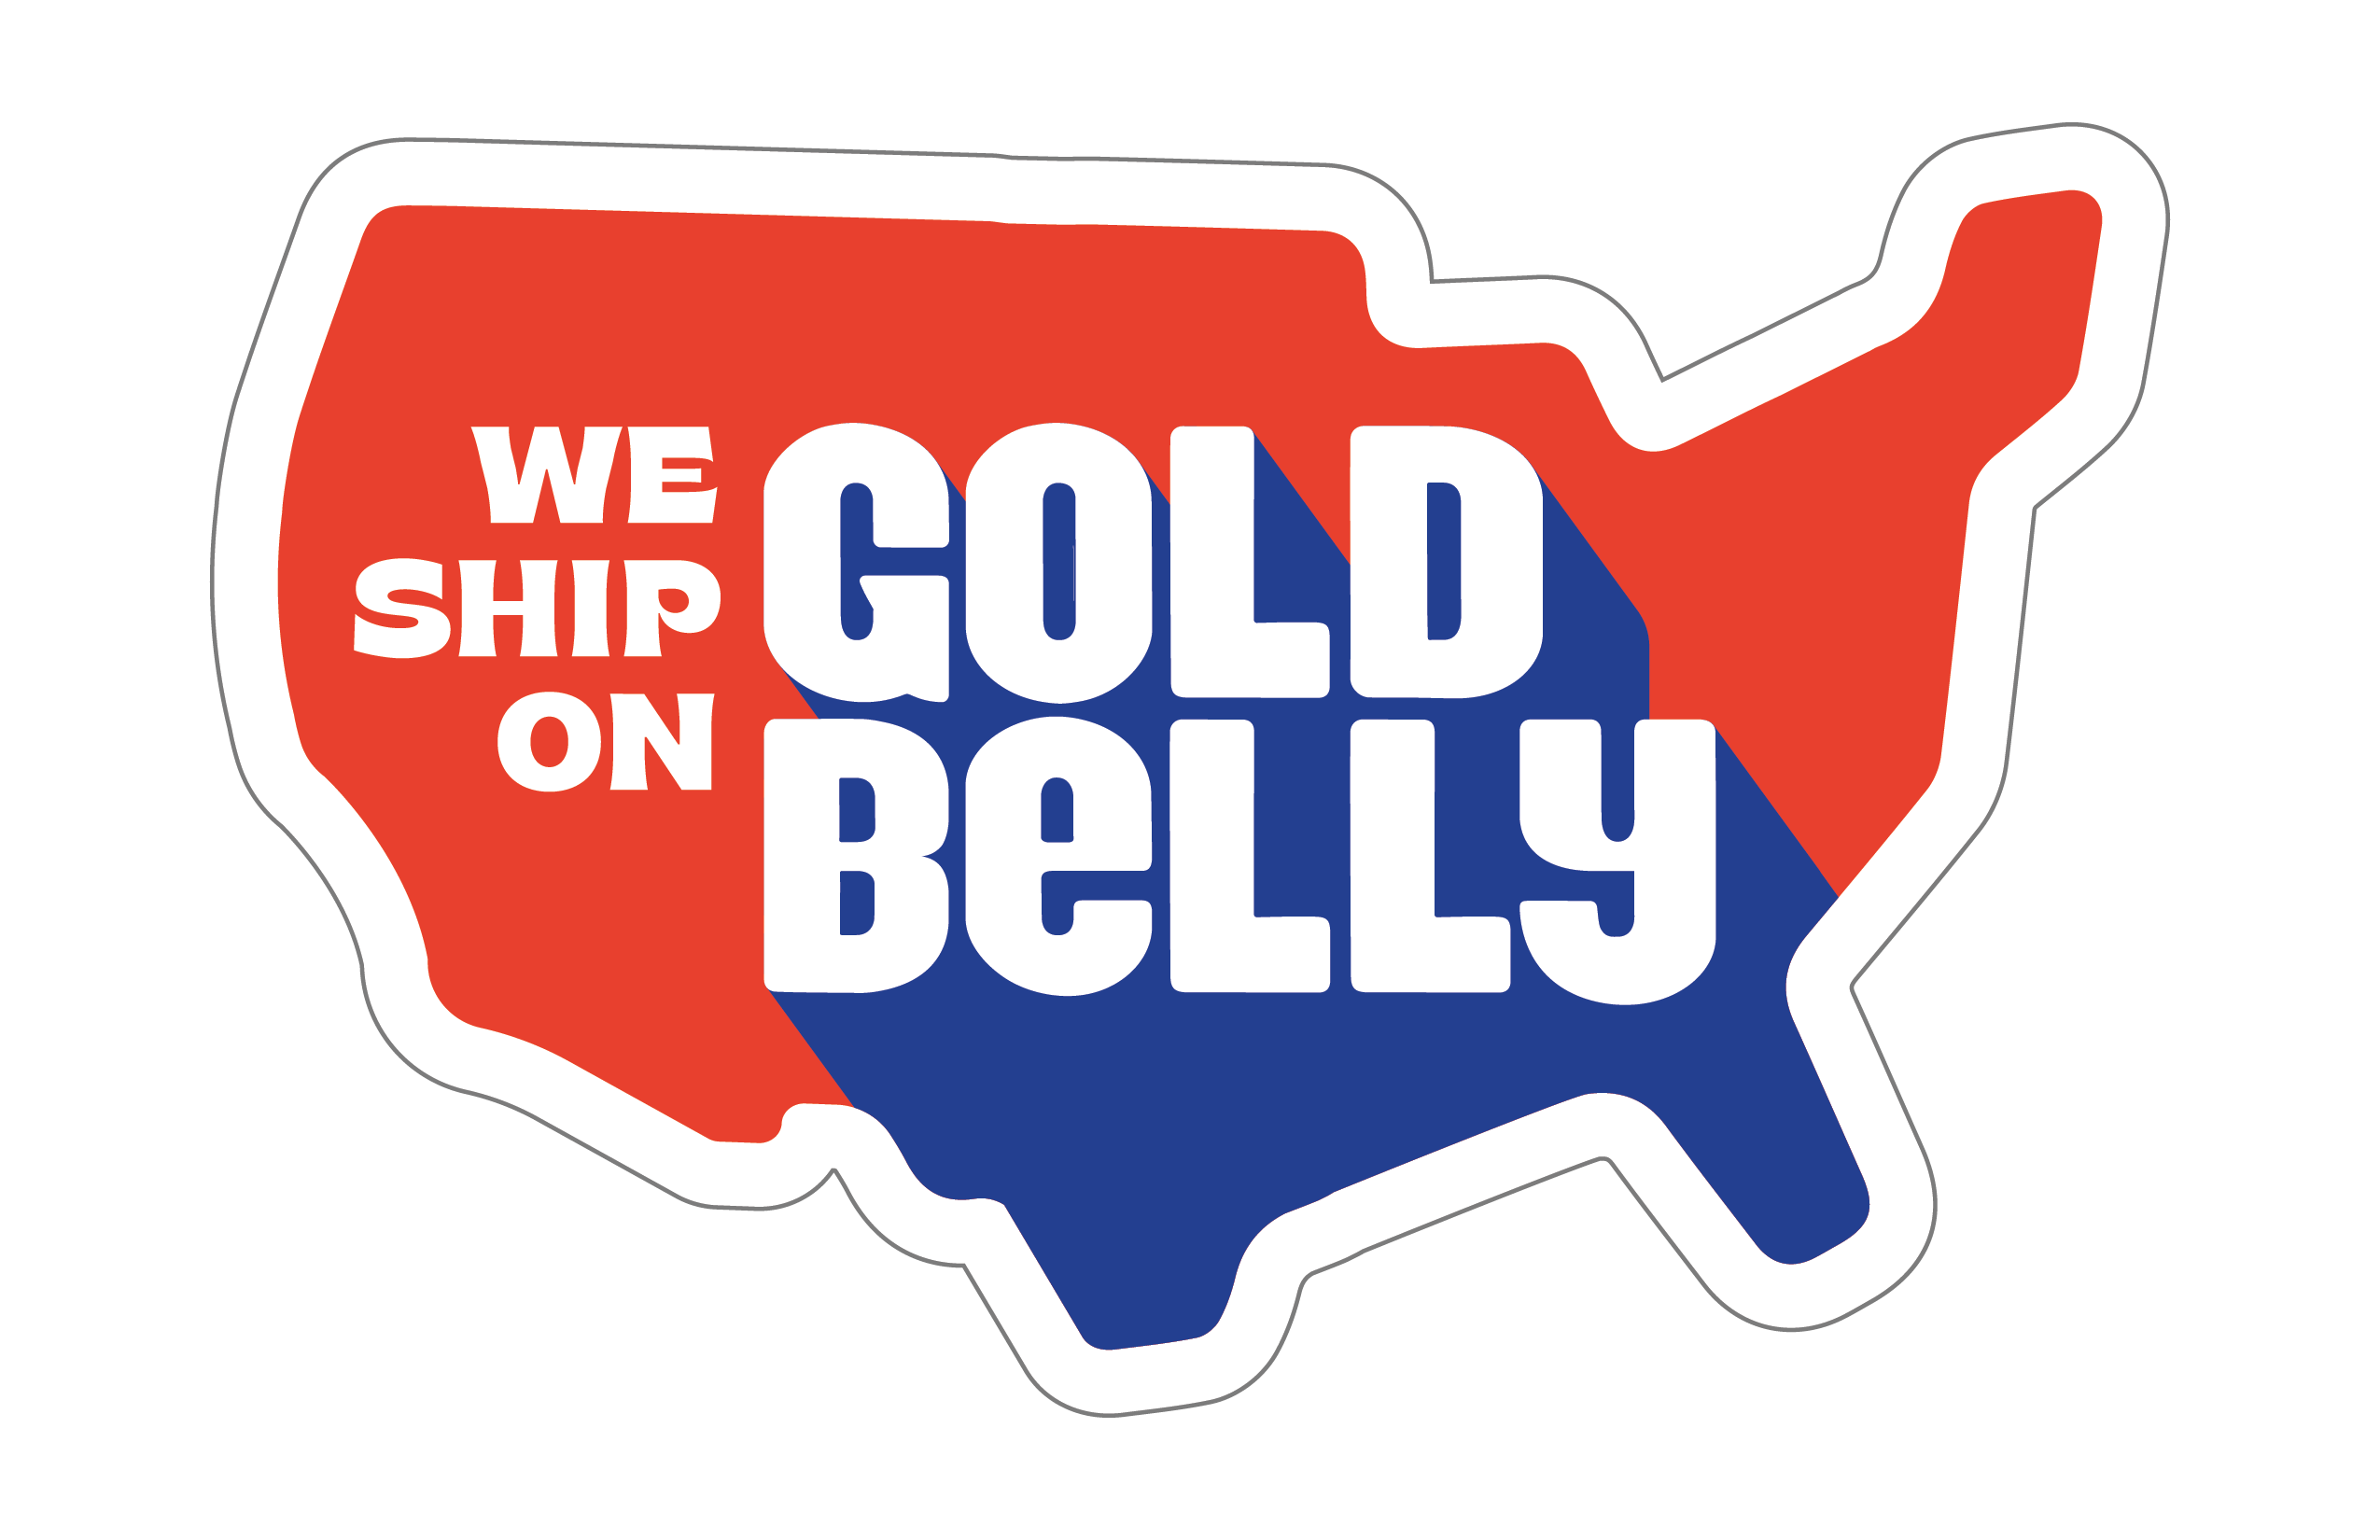 We ship on Goldbelly badge